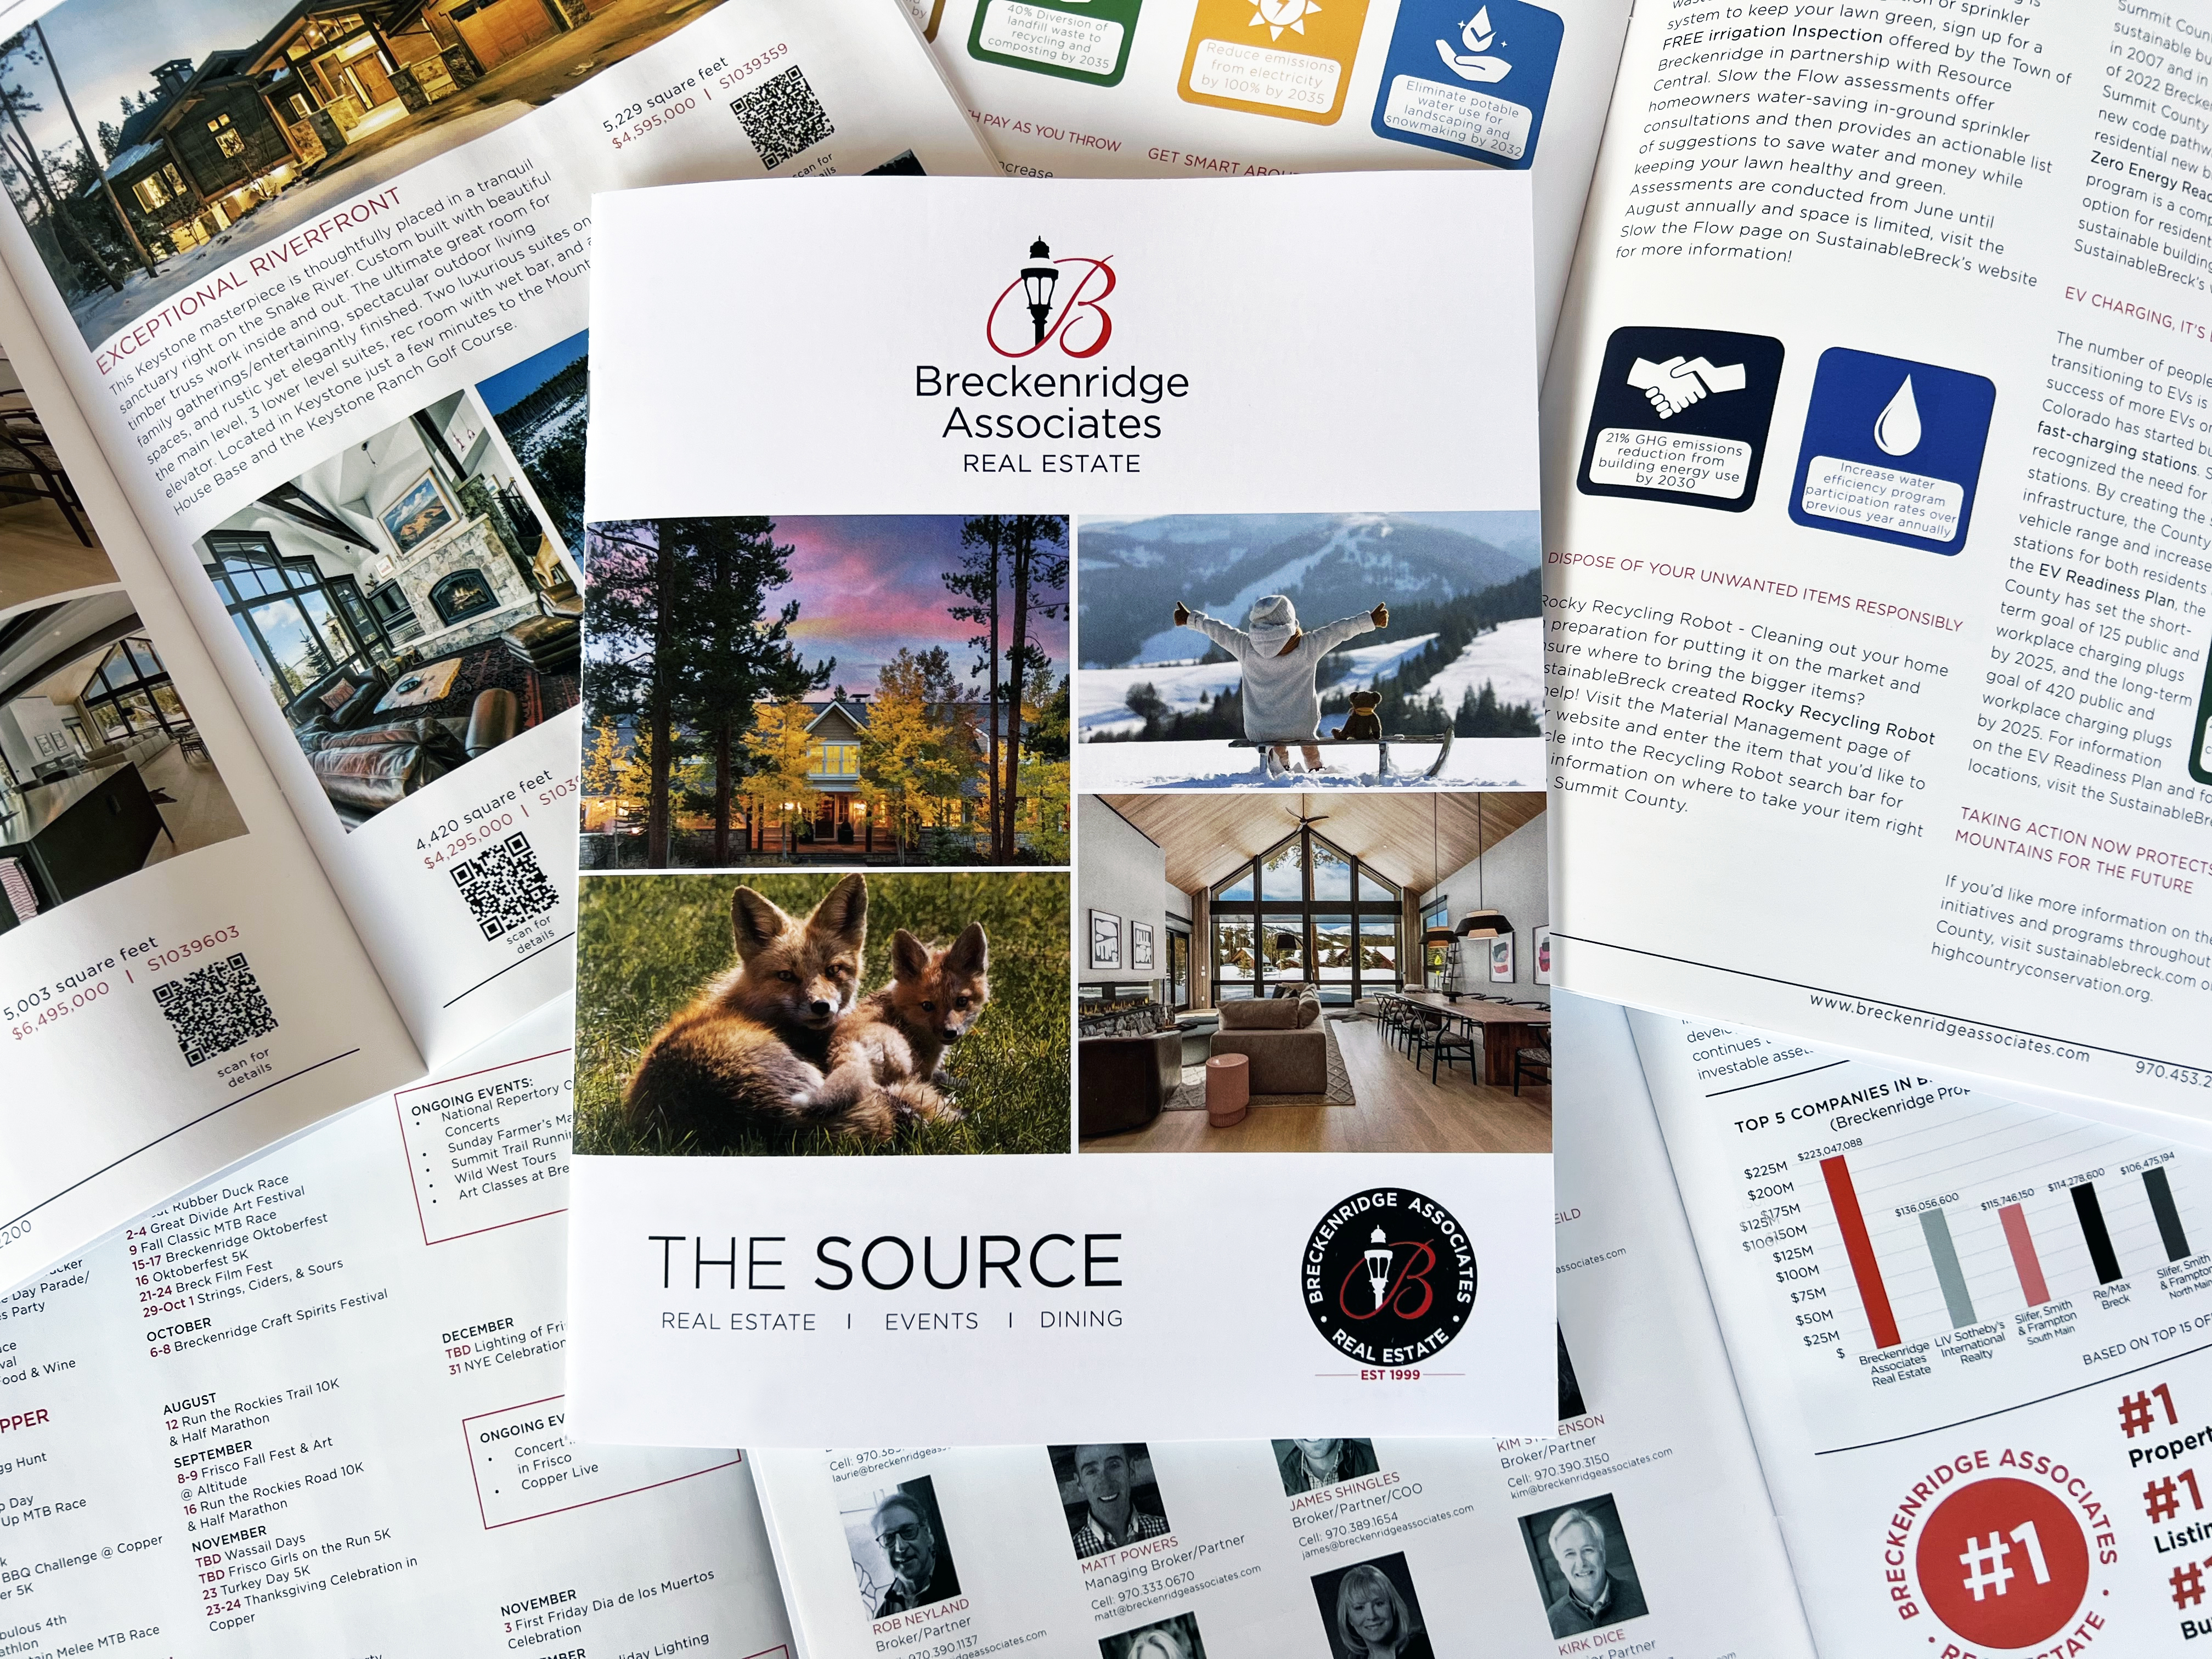 The Source Magazine by Breckenridge Associates Real Estate